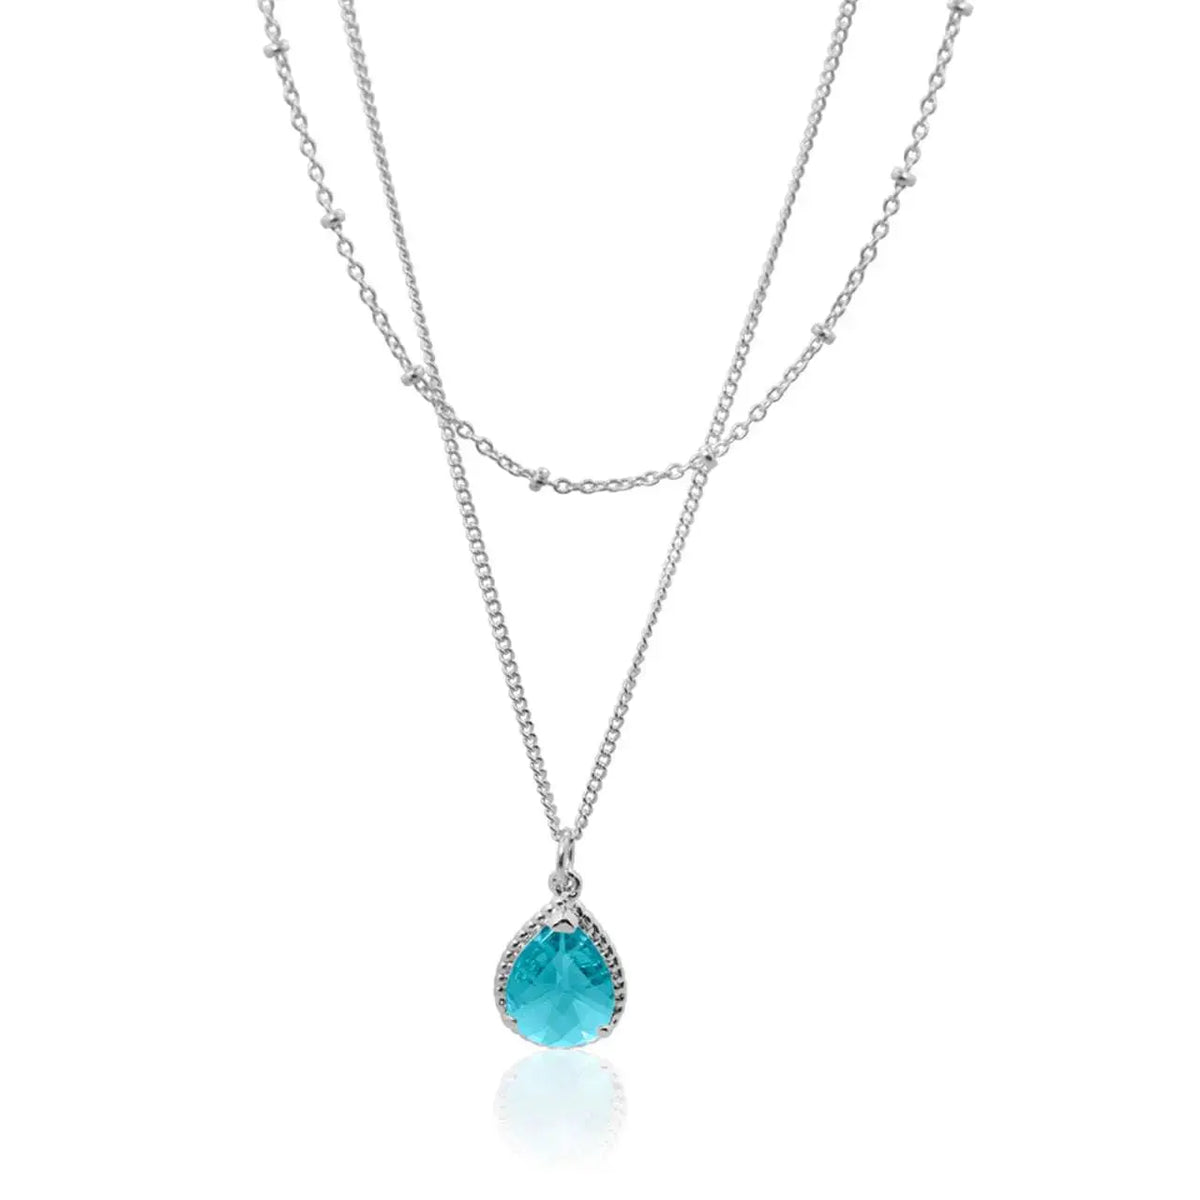 Exquisite - Capri Blue Pendant Necklace - Mystic Soul Jewelry